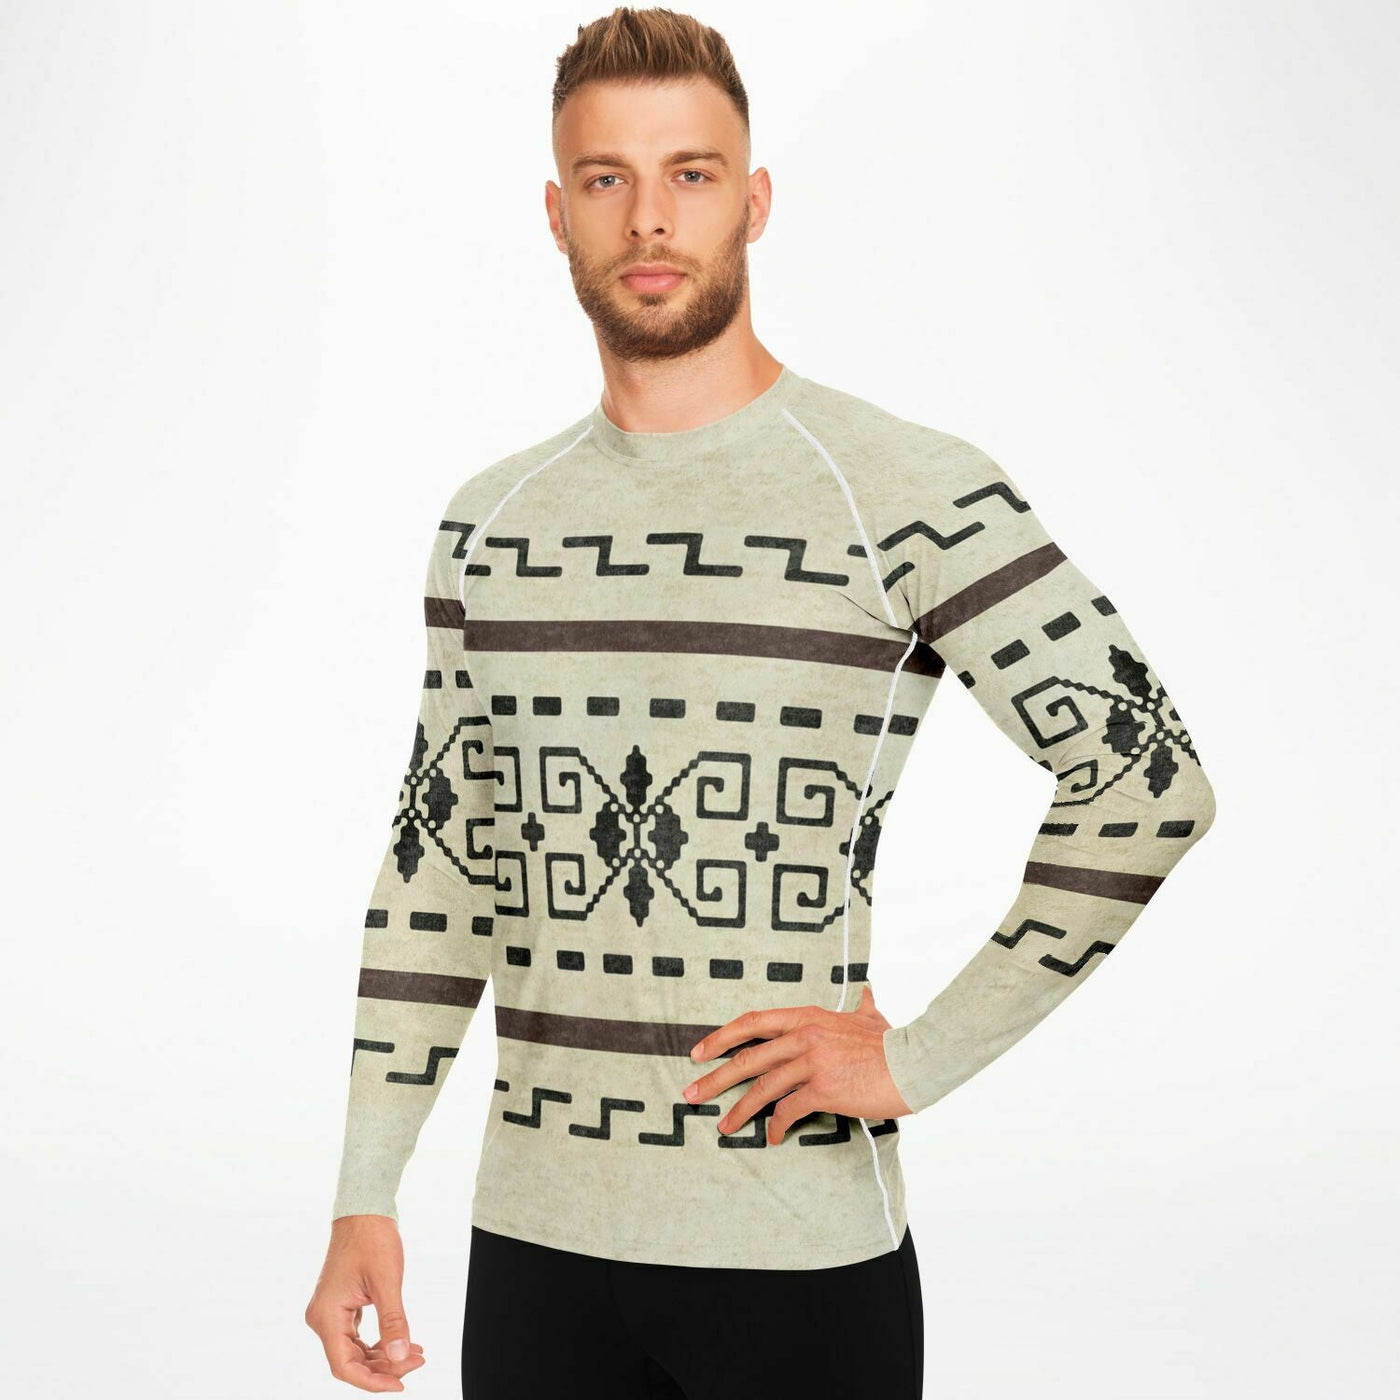 The Dude's Rashguard Surf Shirt W/ Iconic Big Lebowski Sweater Pattern